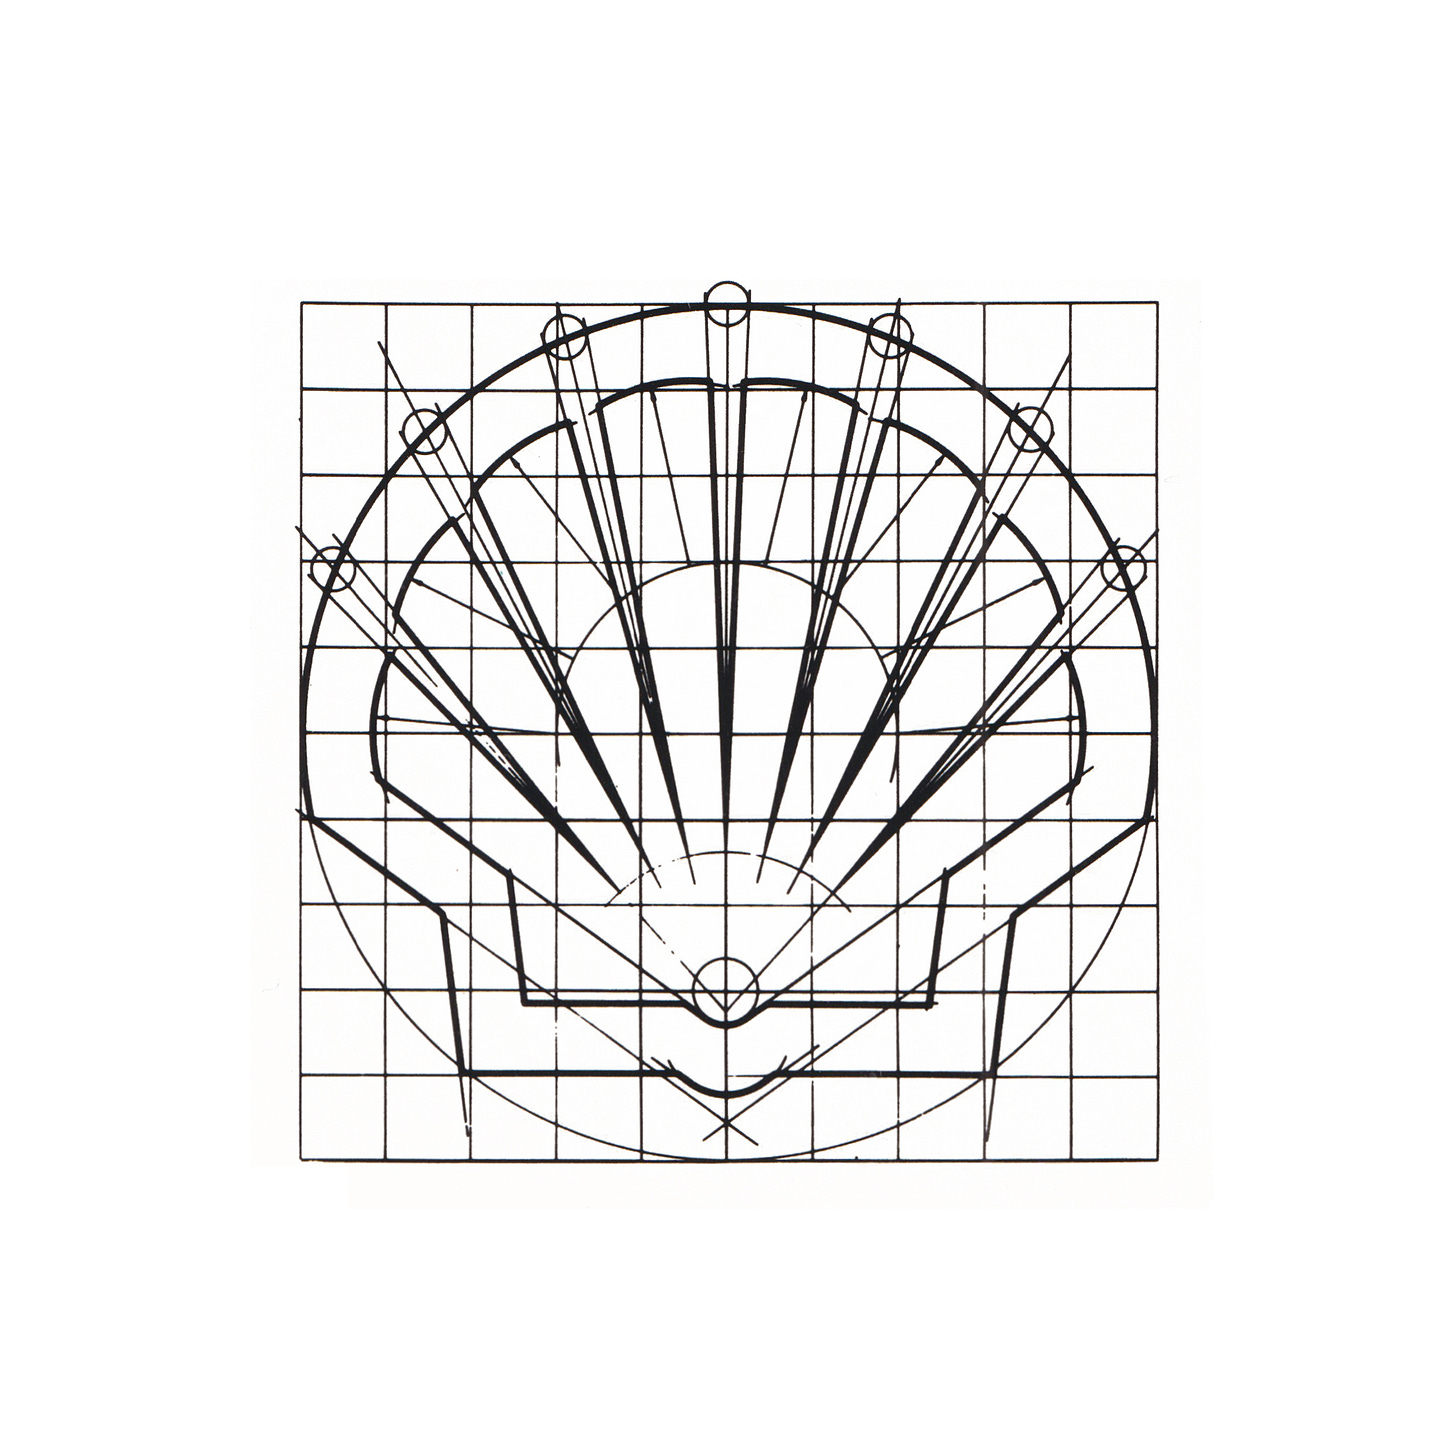 Raymond Loewy's 1971 logo construction for oil giant Shell